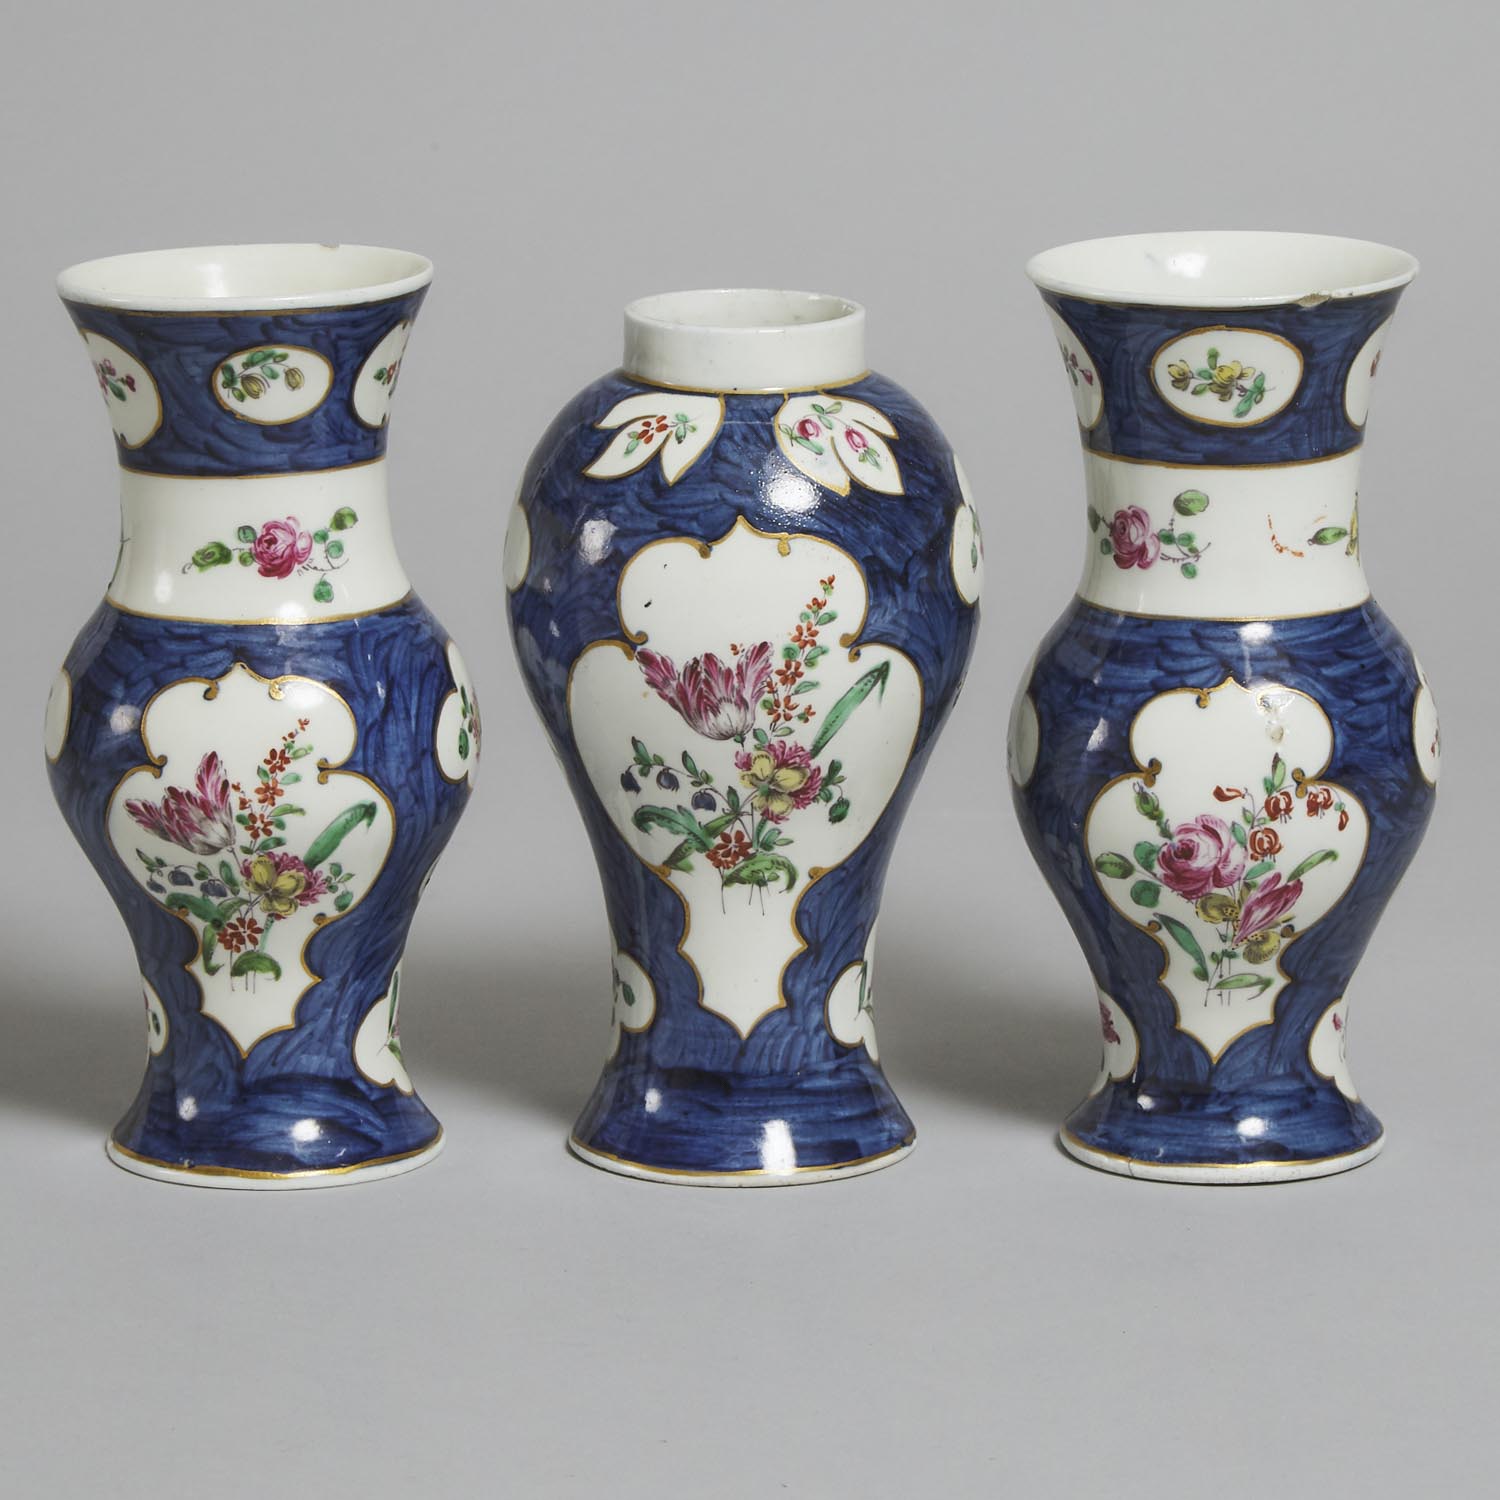 Garniture of Three Christian's Liverpool Blue Ground Vases, c.1770